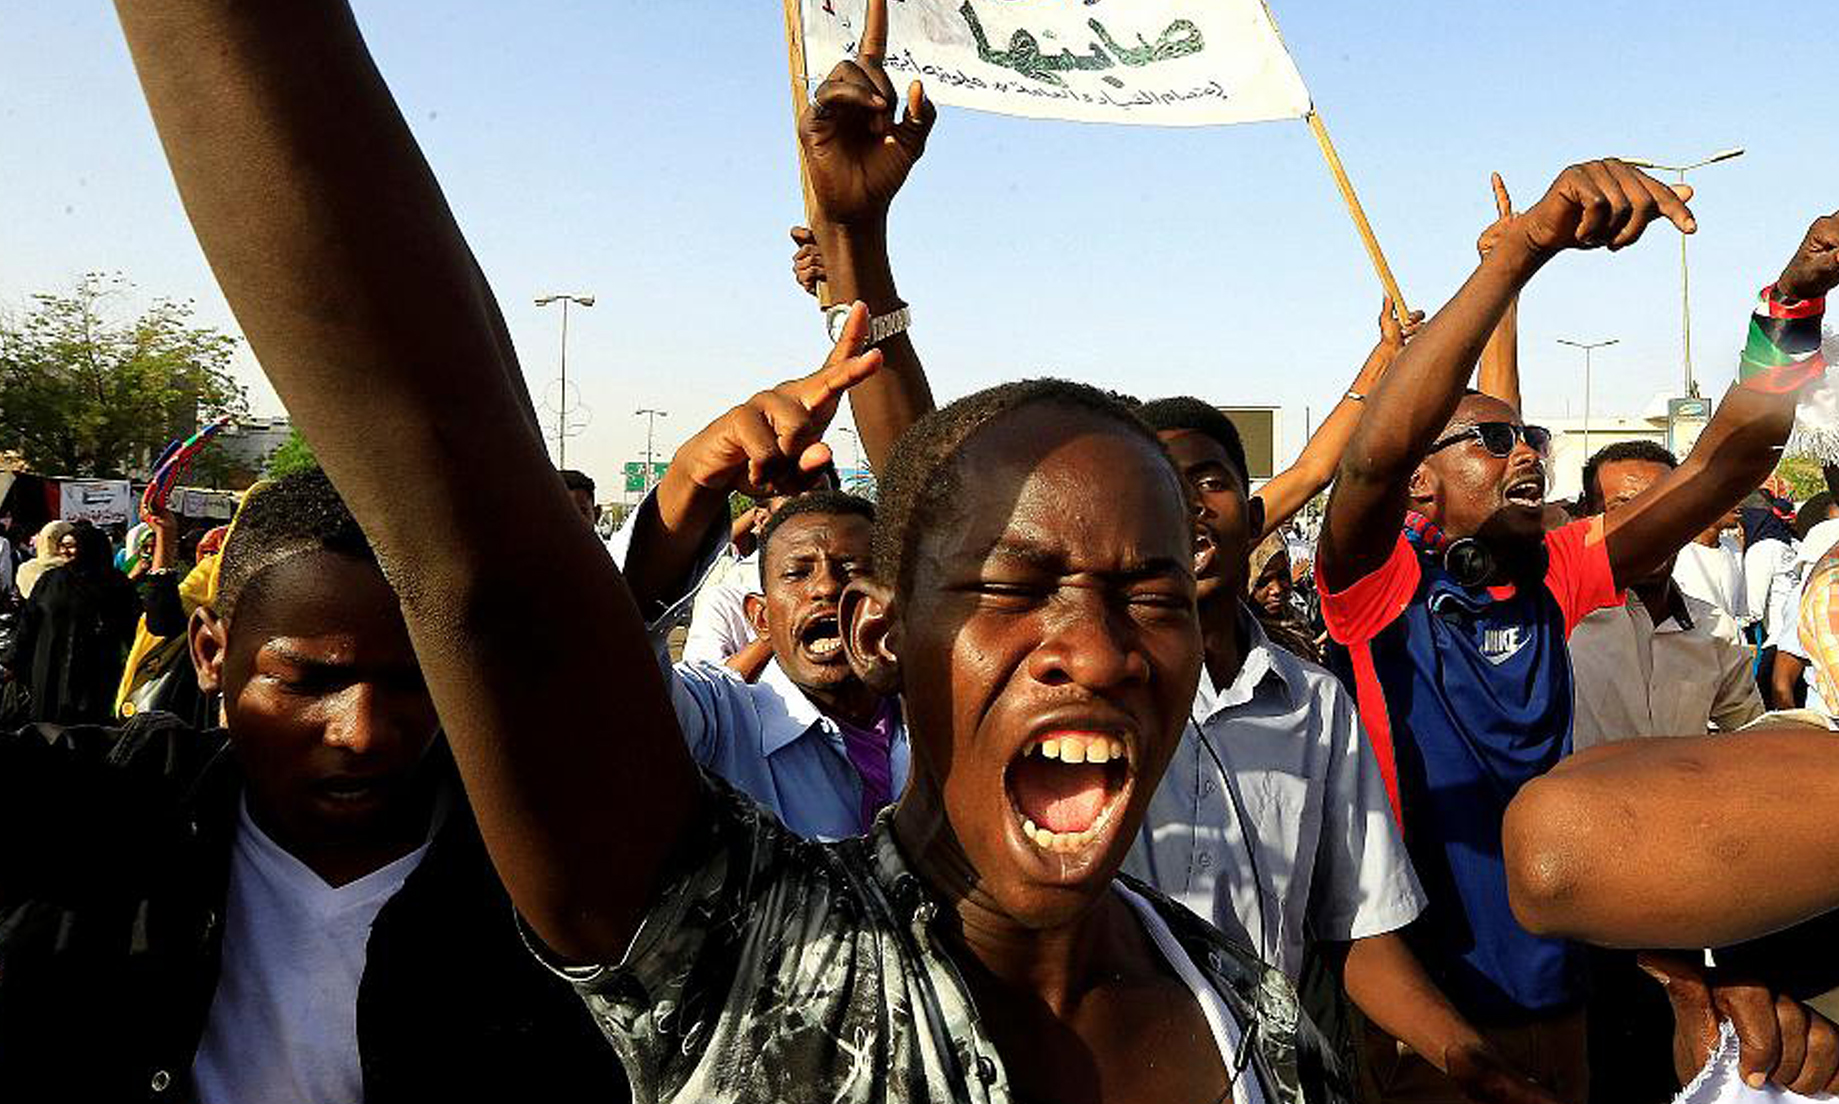 Sudan: Army blocks roads ahead of first anniversary of massacre